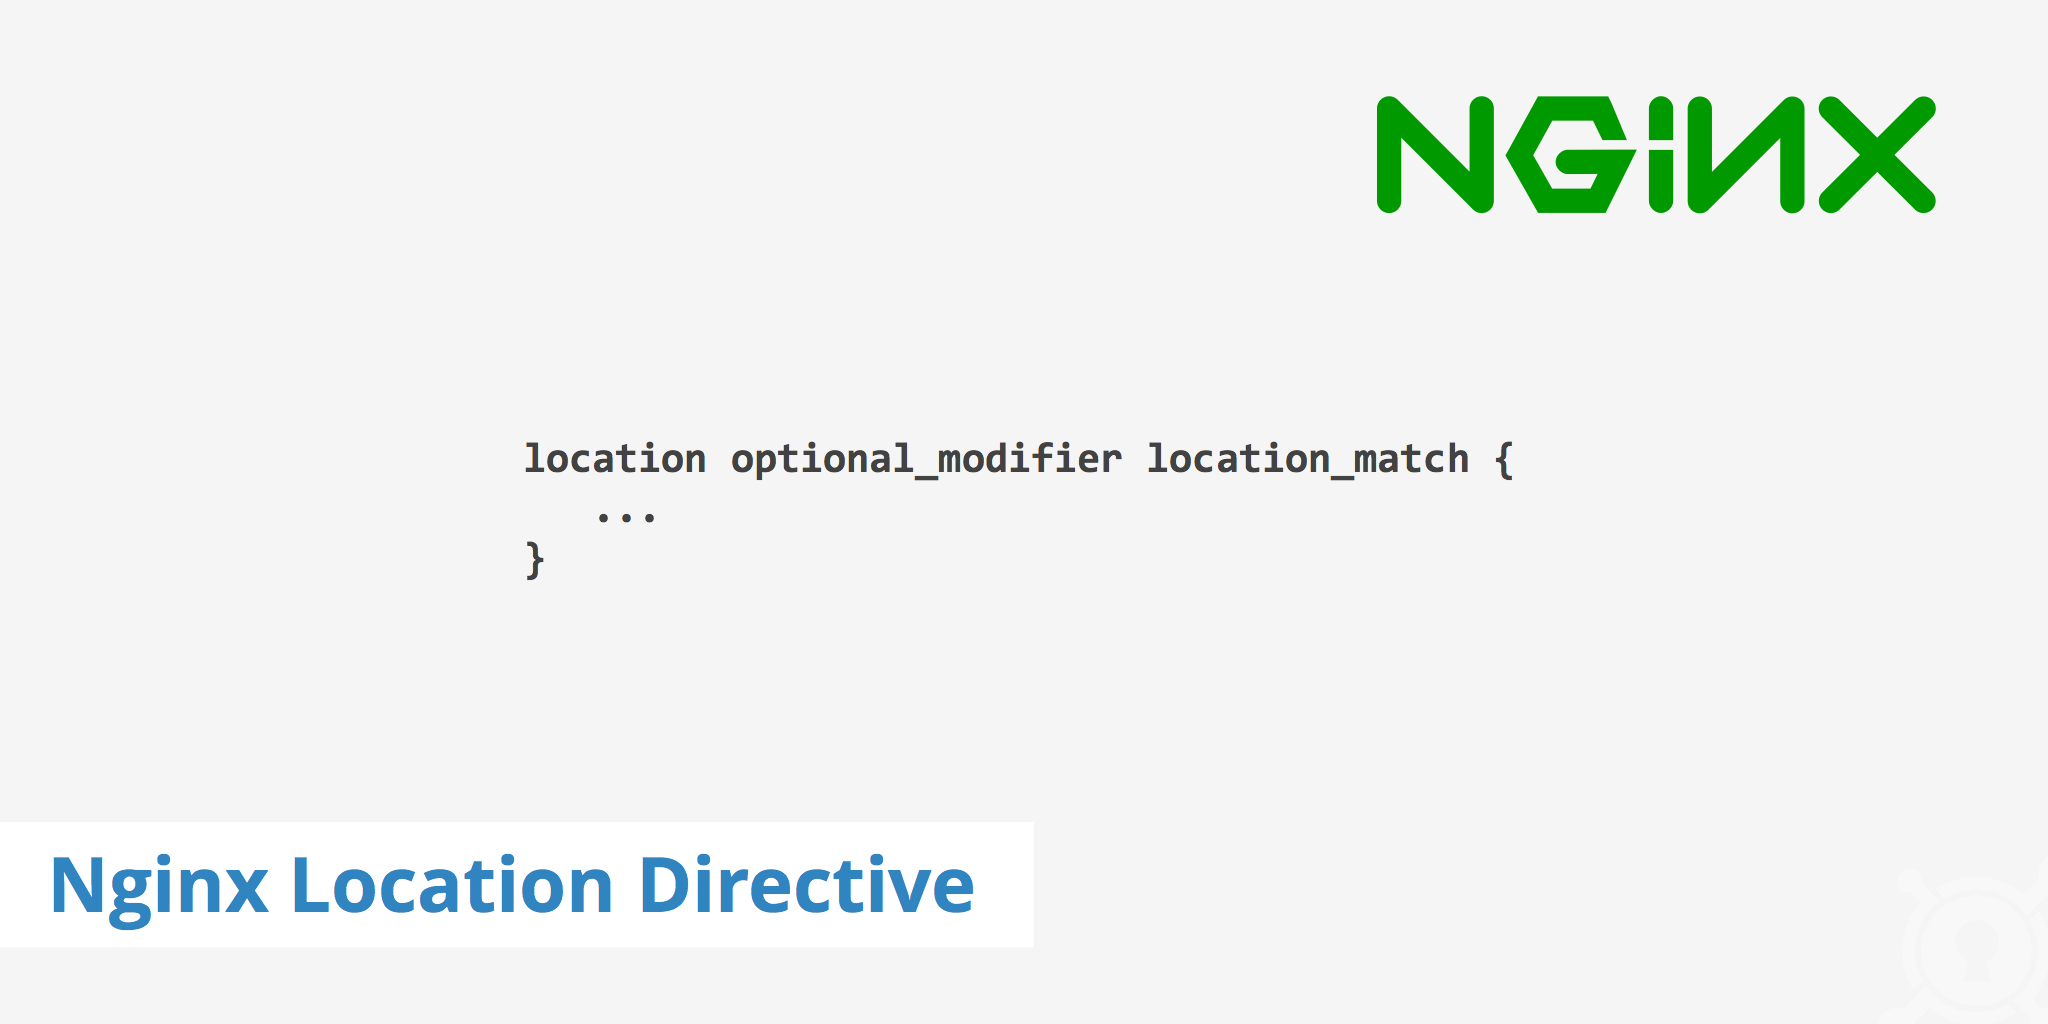 Nginx Location Directive Explained